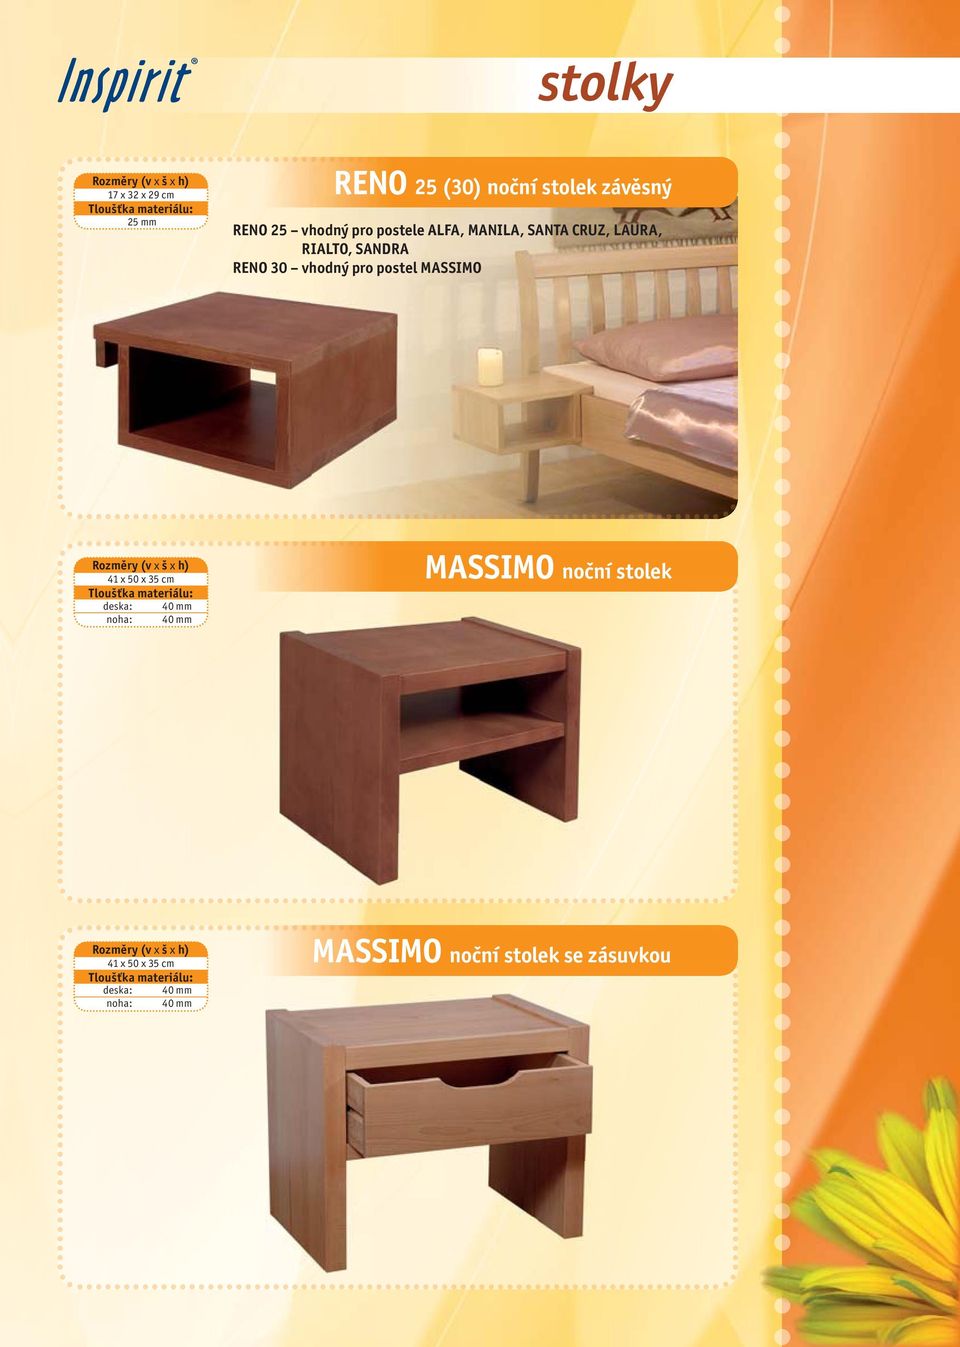 vhodný pro postel MASSIMO 41 x 50 x 35 cm deska: 40 mm noha: 40 mm MASSIMO